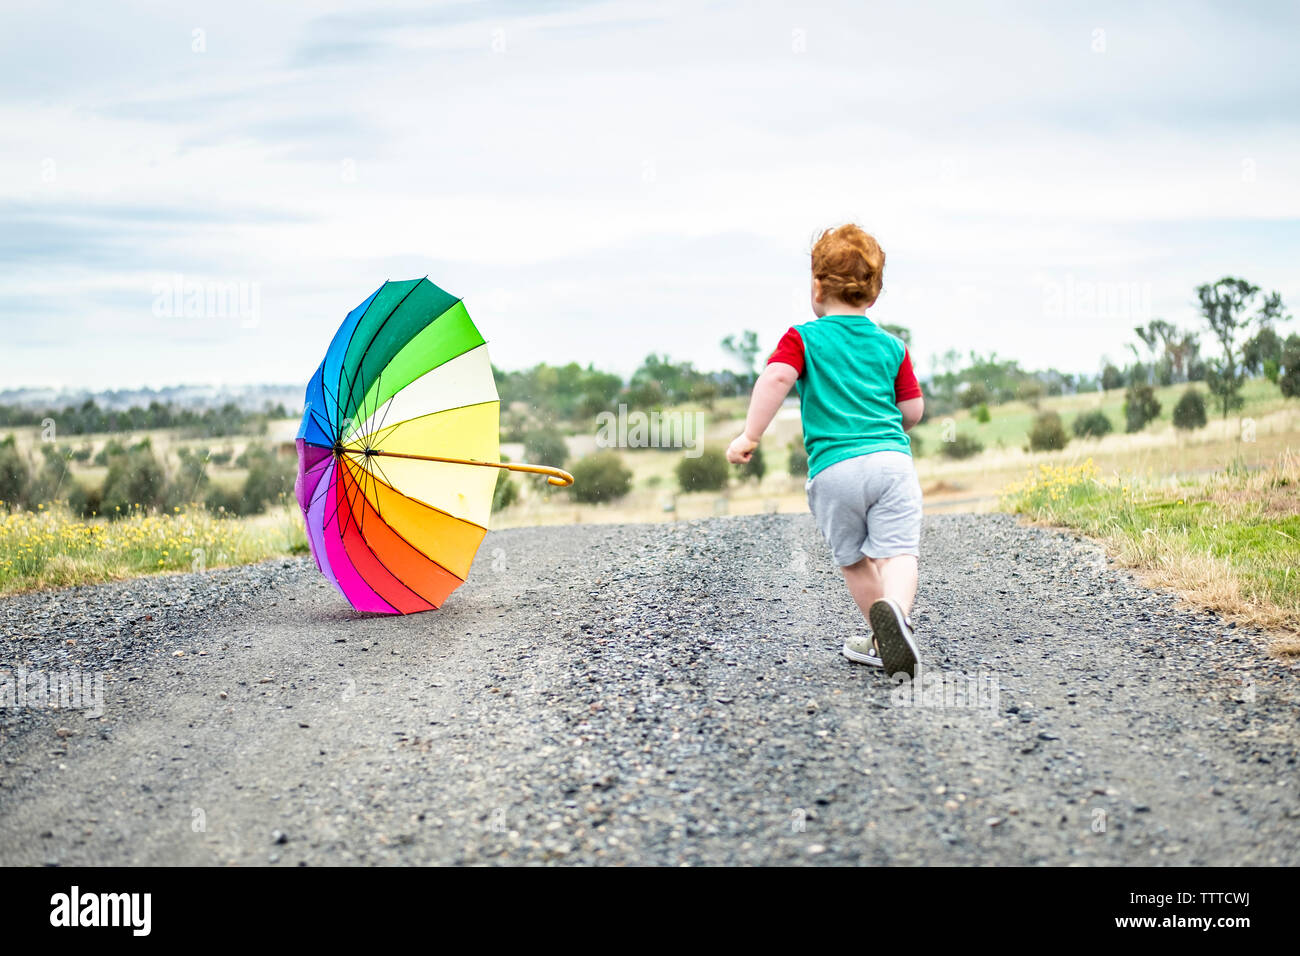 young boy chasing a rainbow umbrella Stock Photo